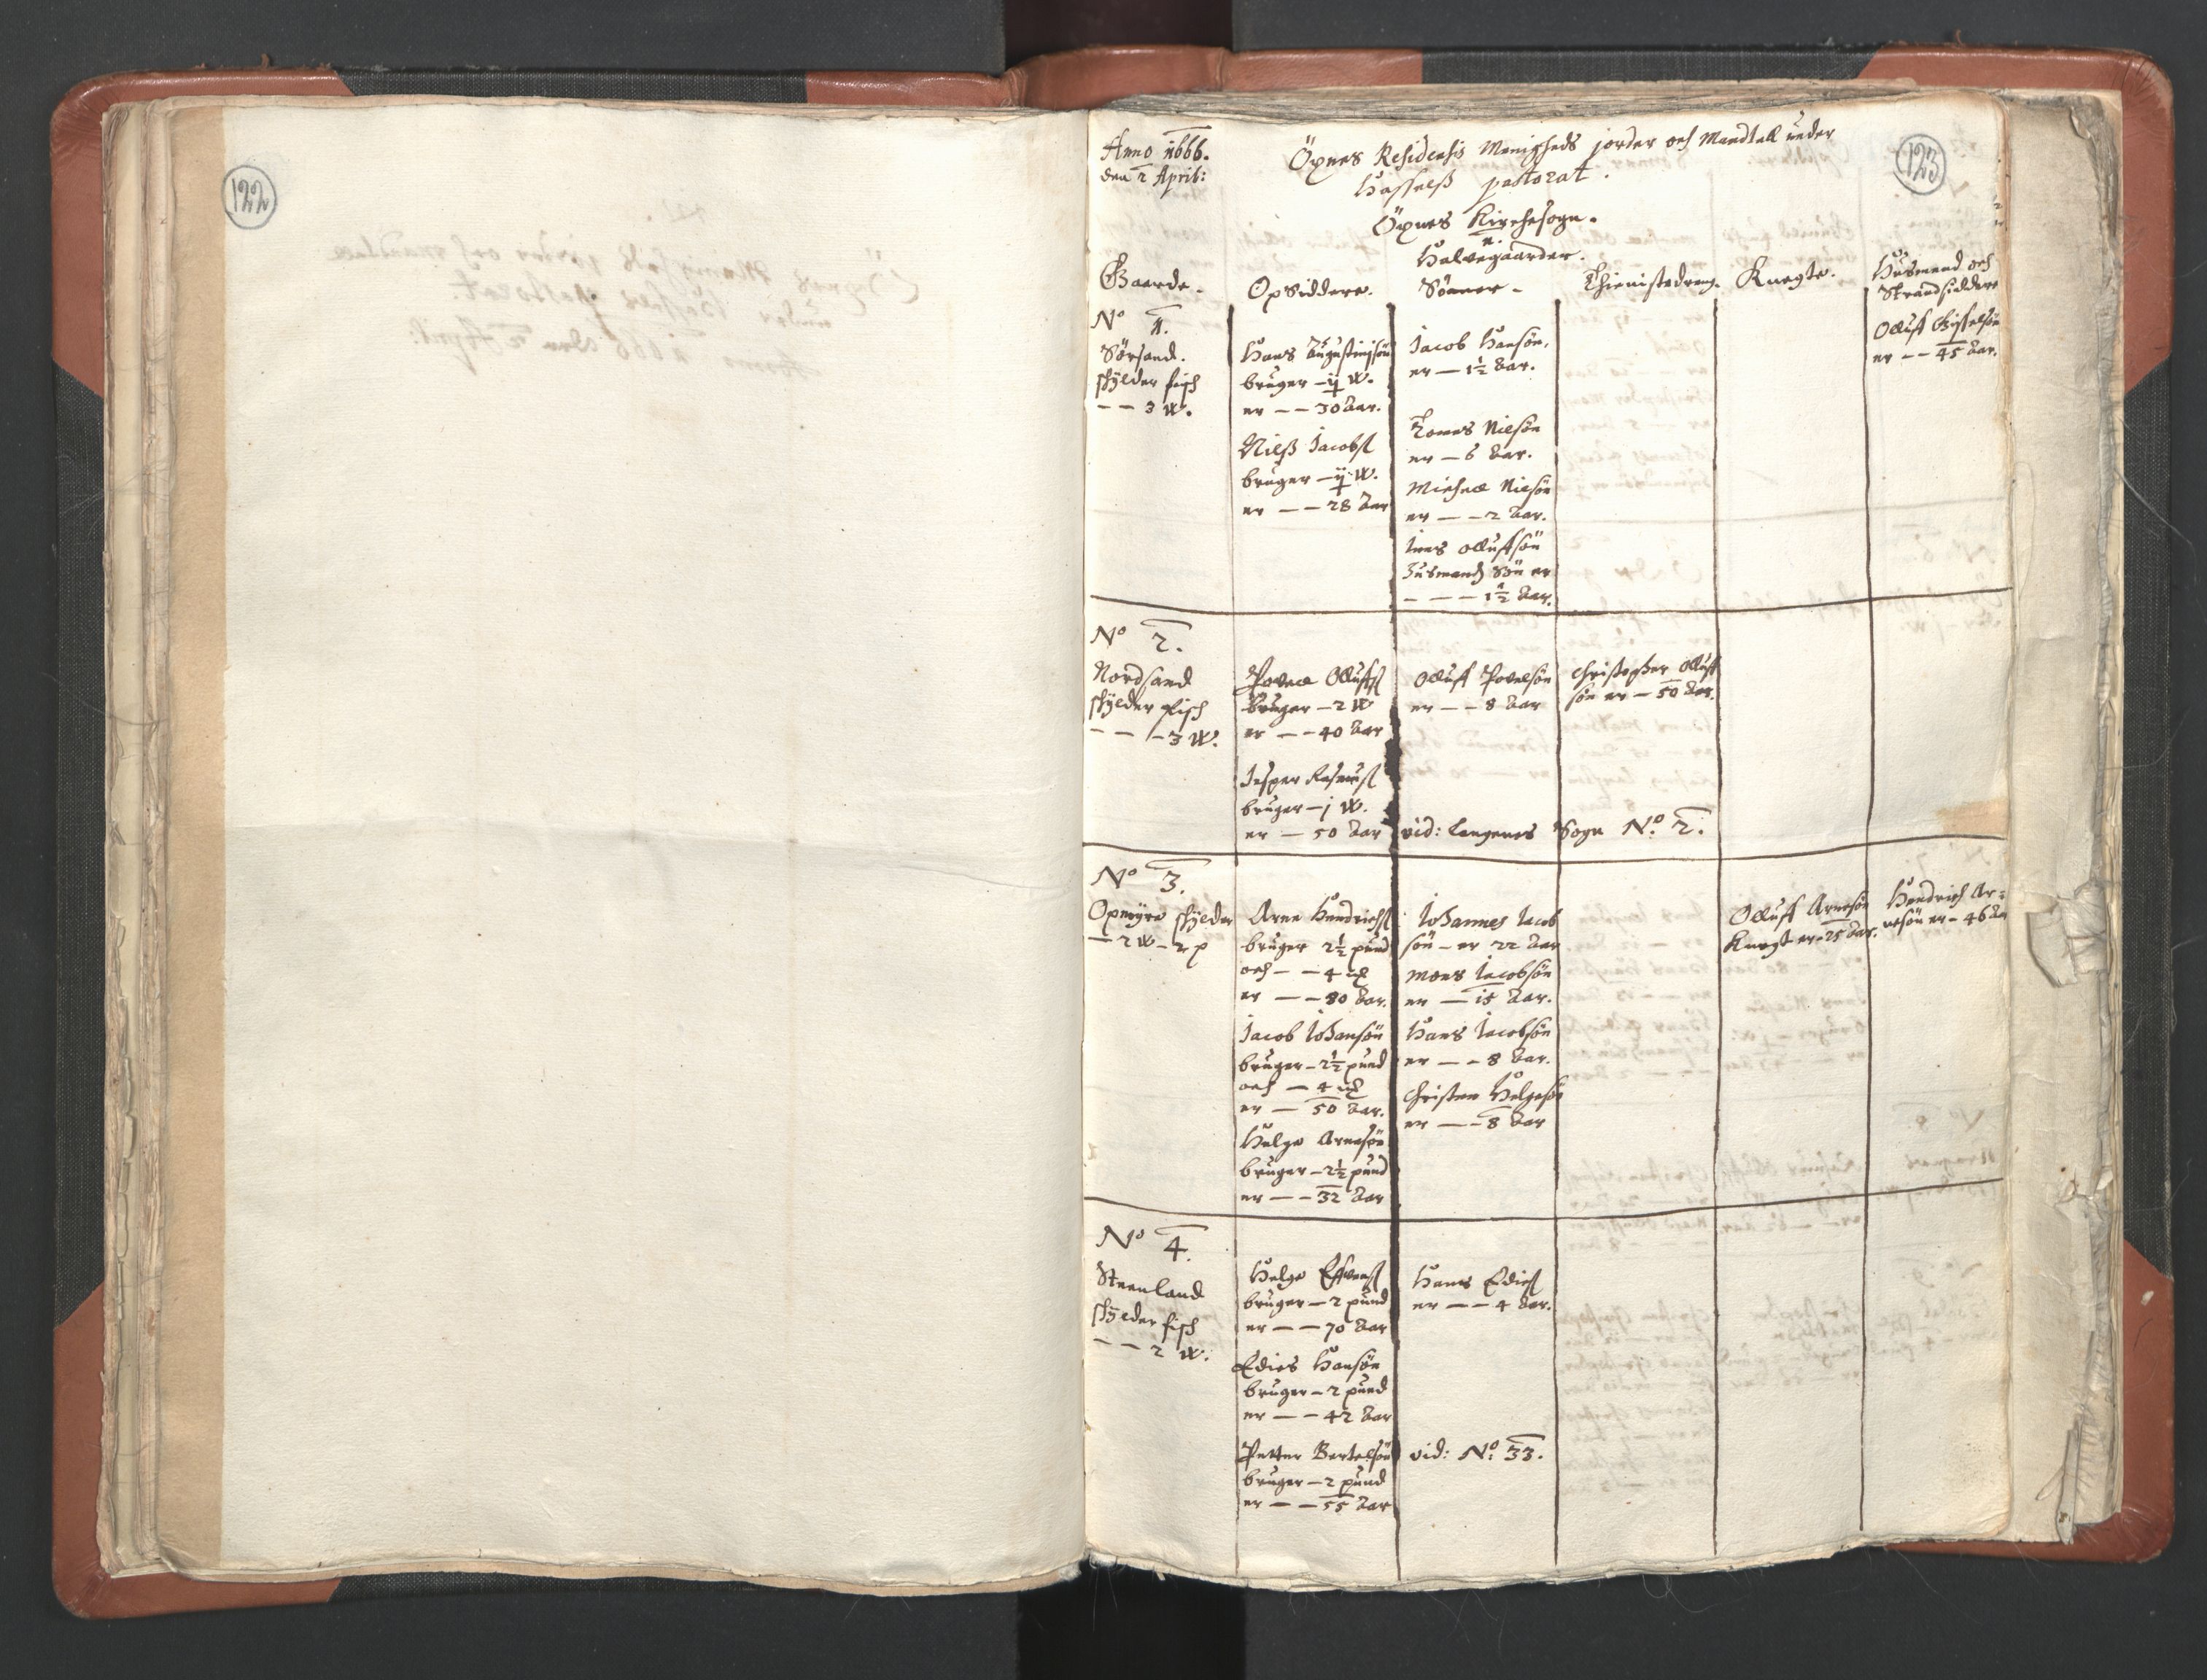 RA, Vicar's Census 1664-1666, no. 36: Lofoten and Vesterålen deanery, Senja deanery and Troms deanery, 1664-1666, p. 122-123